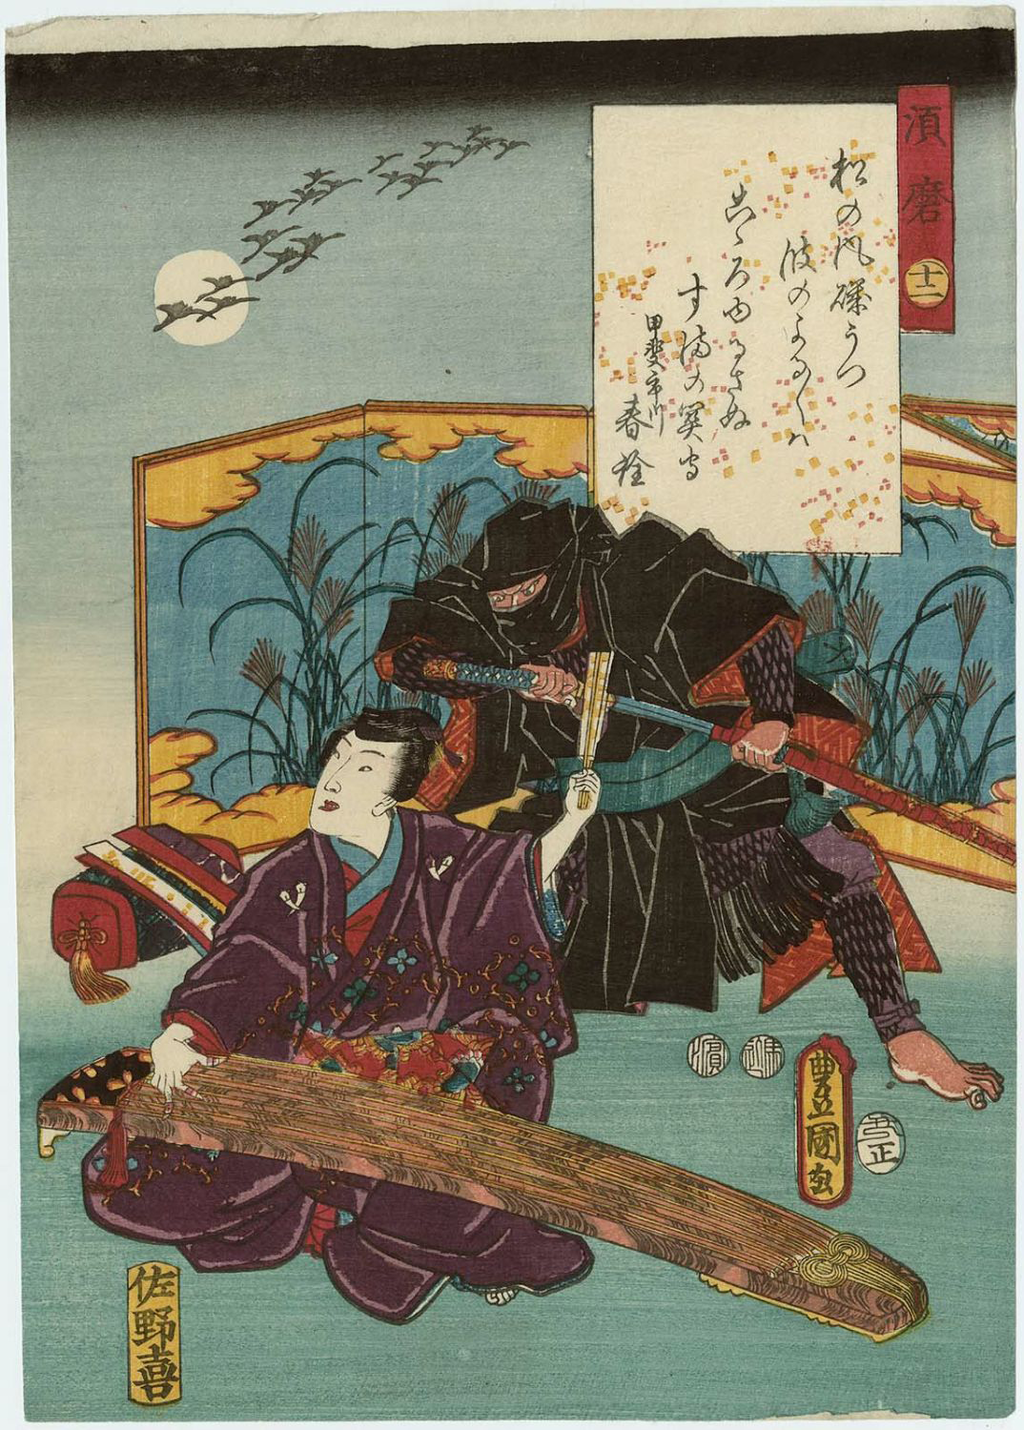 Woodblock Print on Paper called "Prince Hikaru and the Ninja"